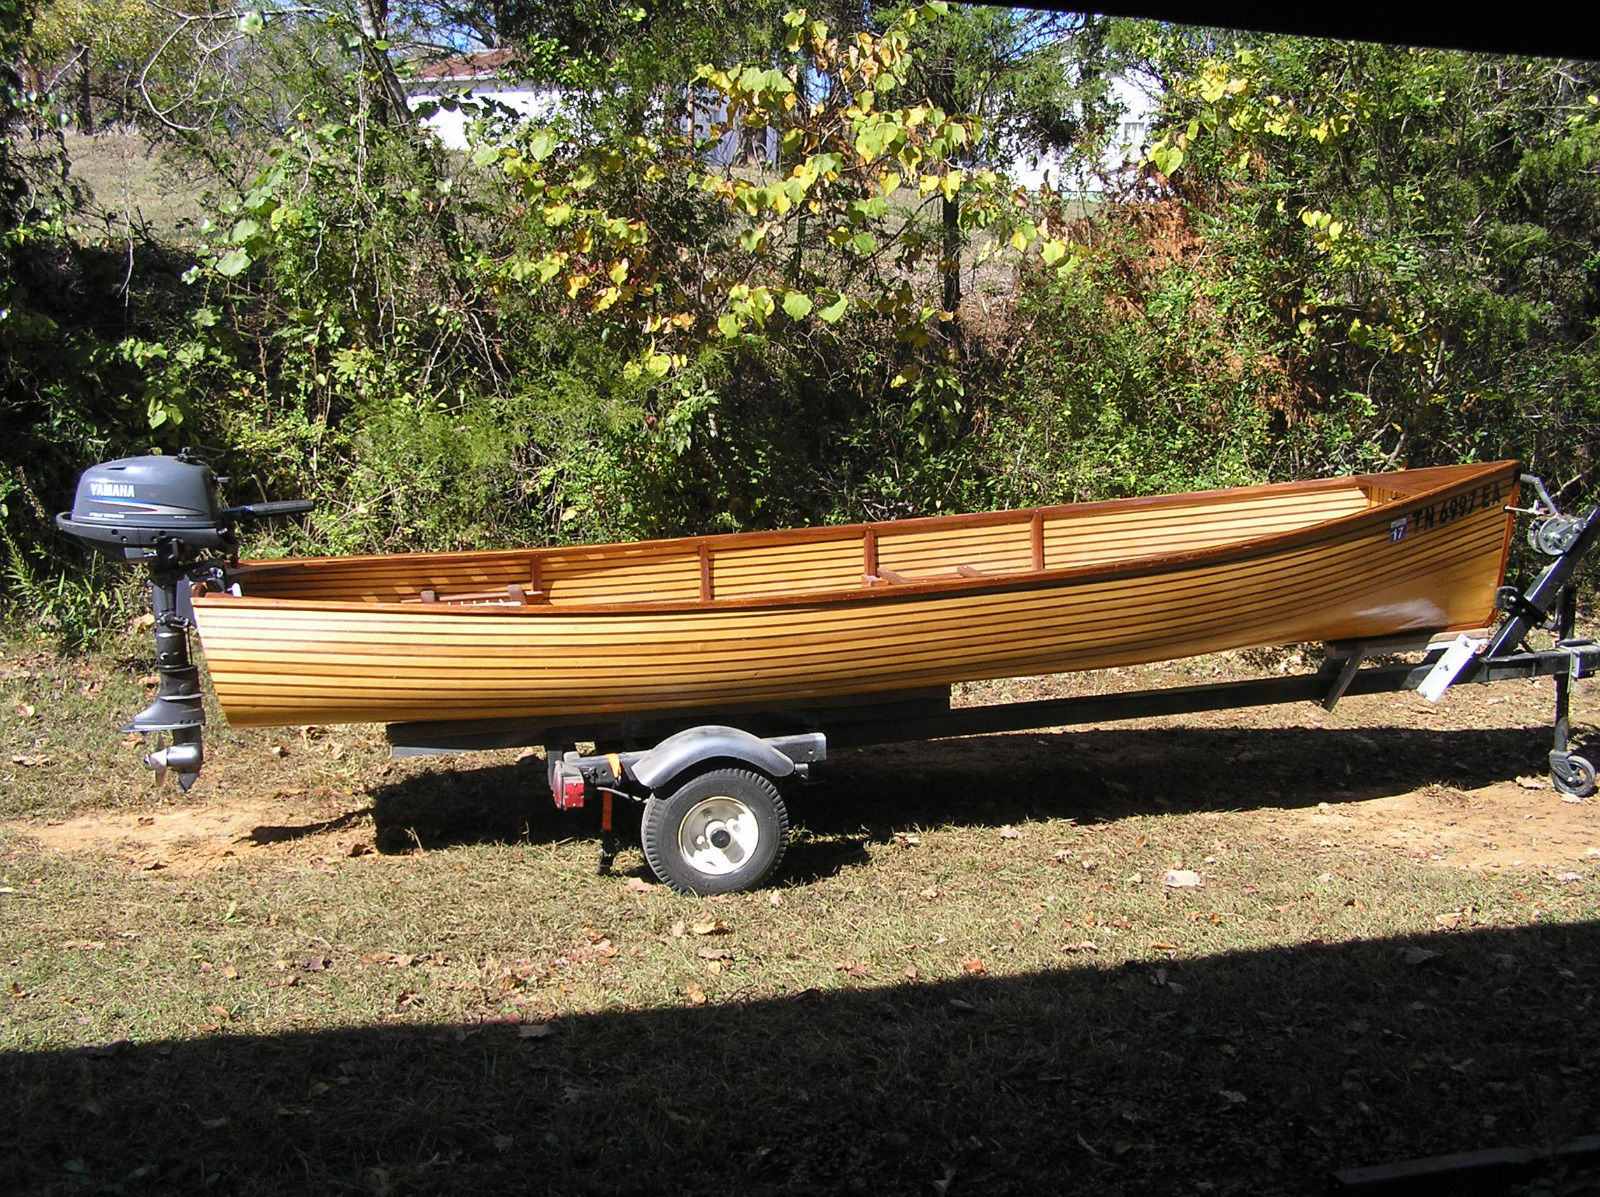 Custom Built Sport Boat 2010 for sale for $3,200 - Boats ...